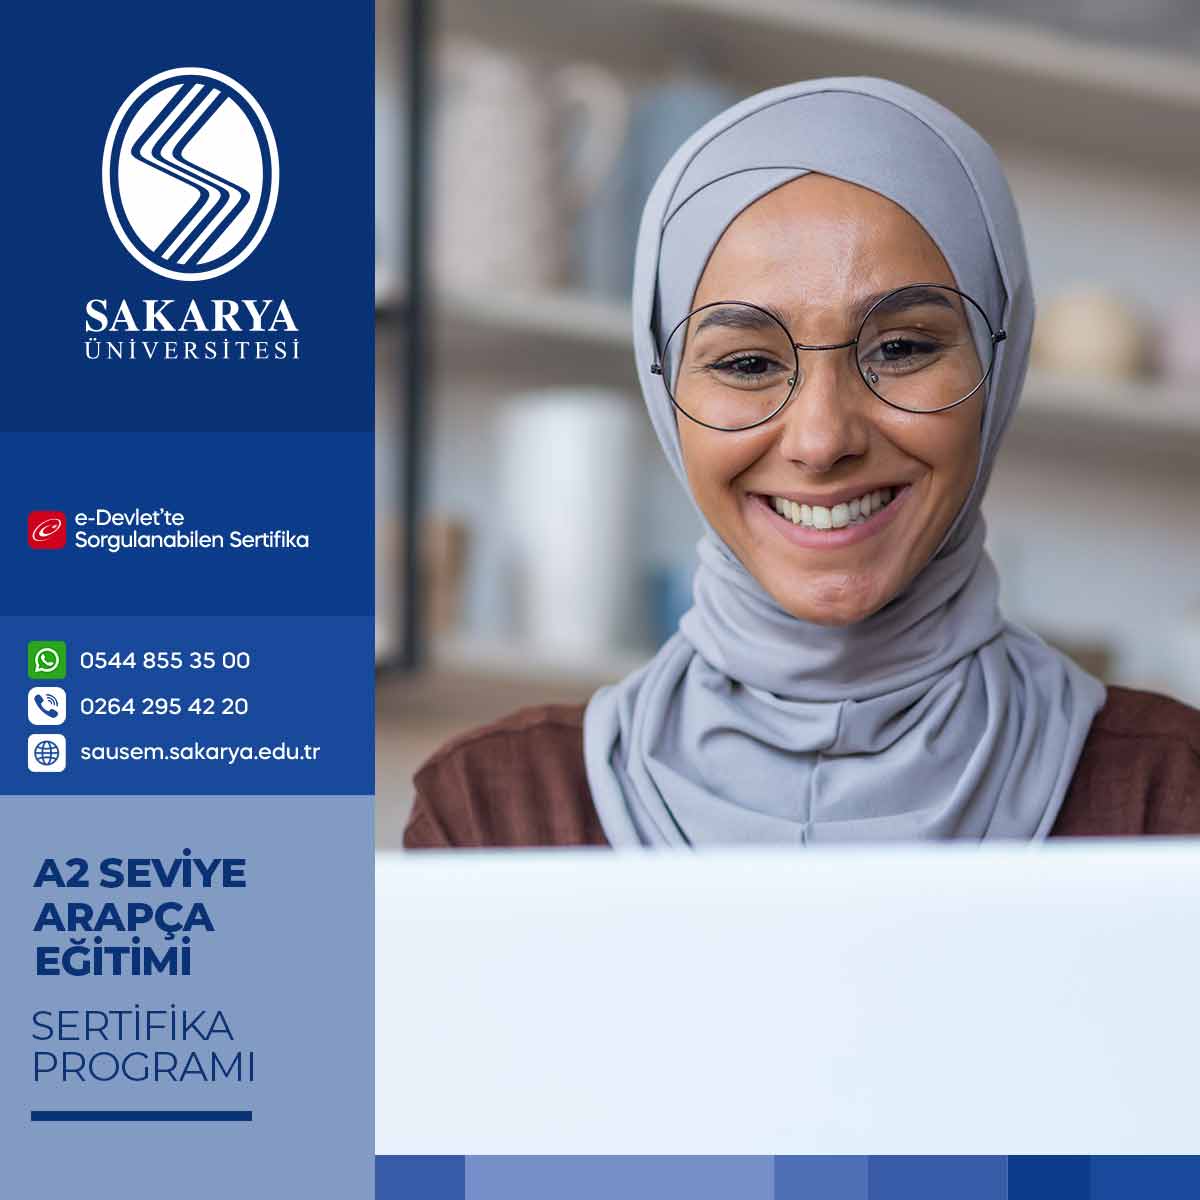 A2 Seviye Arapça Eğitimi Sertifika Programı